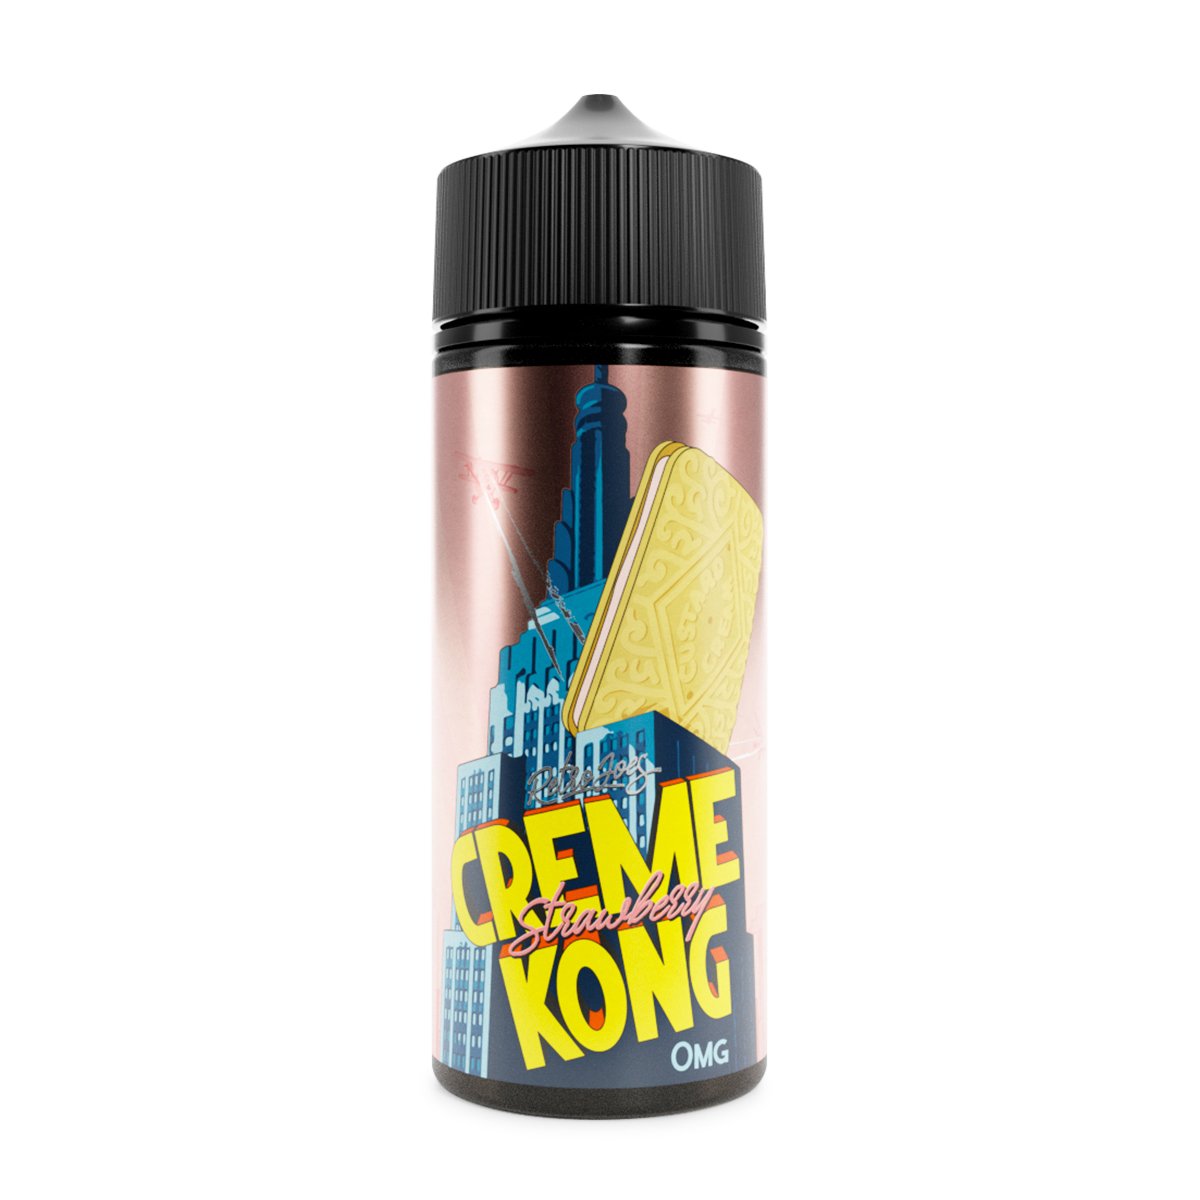 Retro Joes Creme Kong Strawberry 0mg 100ml Shortfill E-Liquid